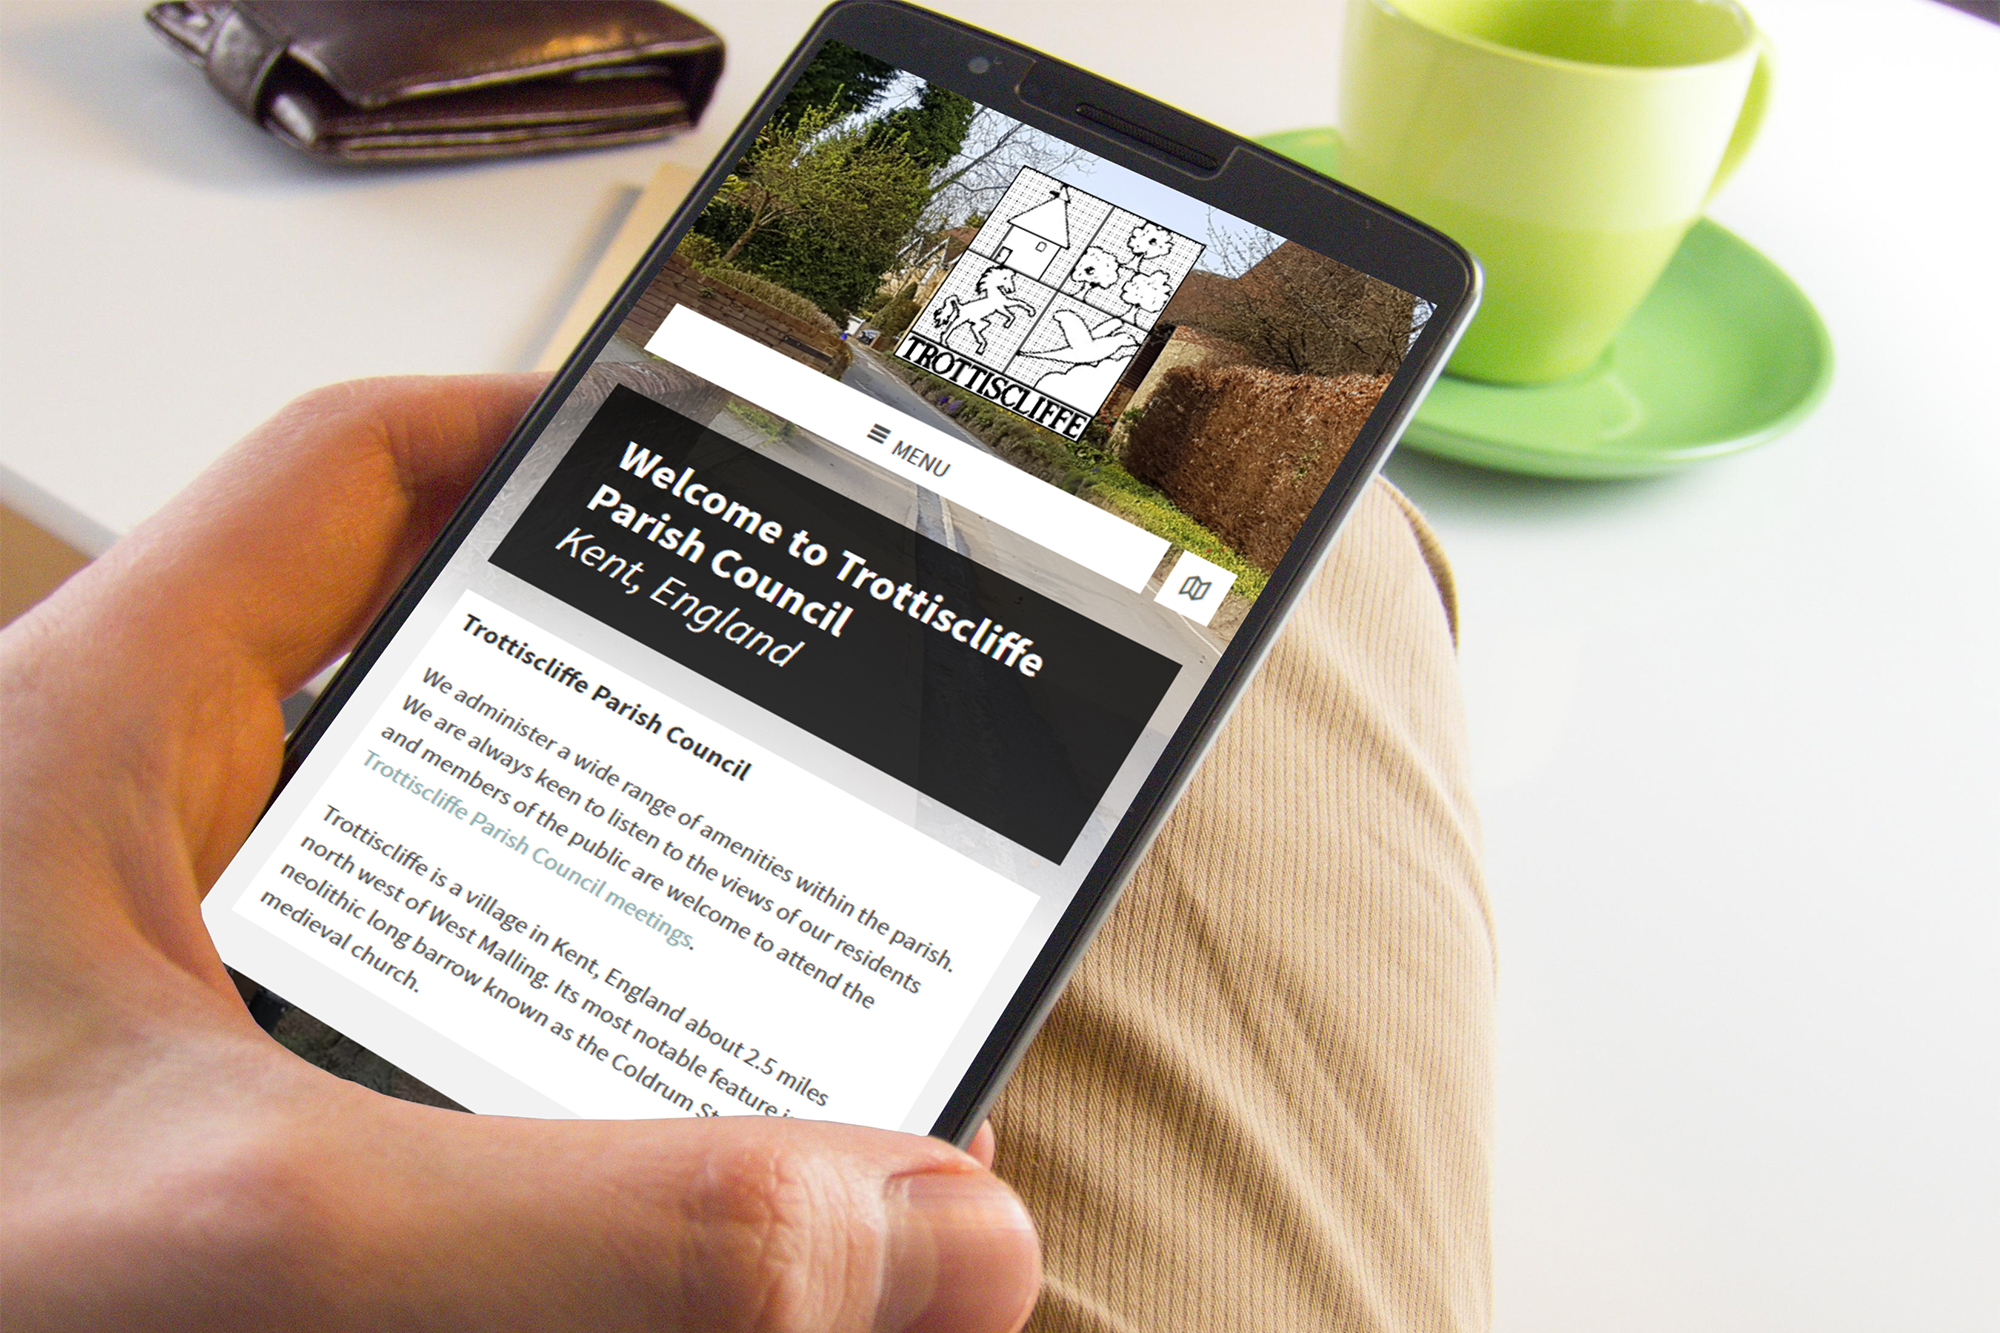 Trottiscliffe Parish Council website screenshot on a mobile